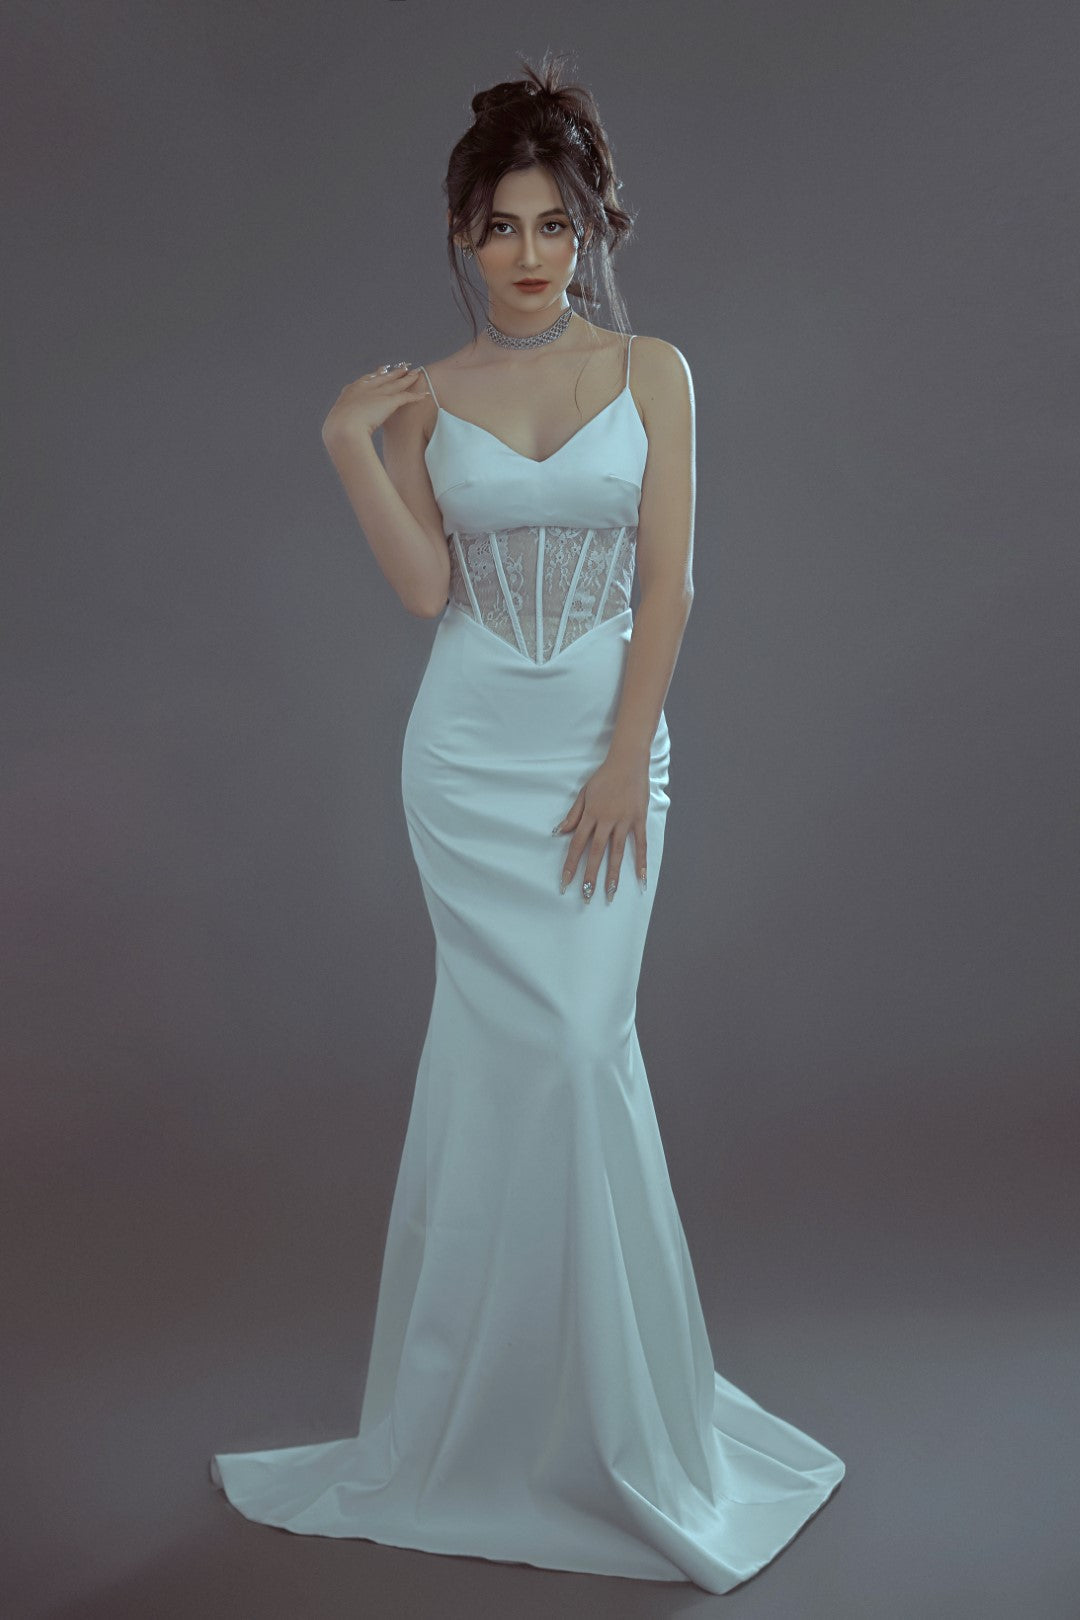 Minimalist and Elegant Wedding Dress with Figure-Flattering Corset